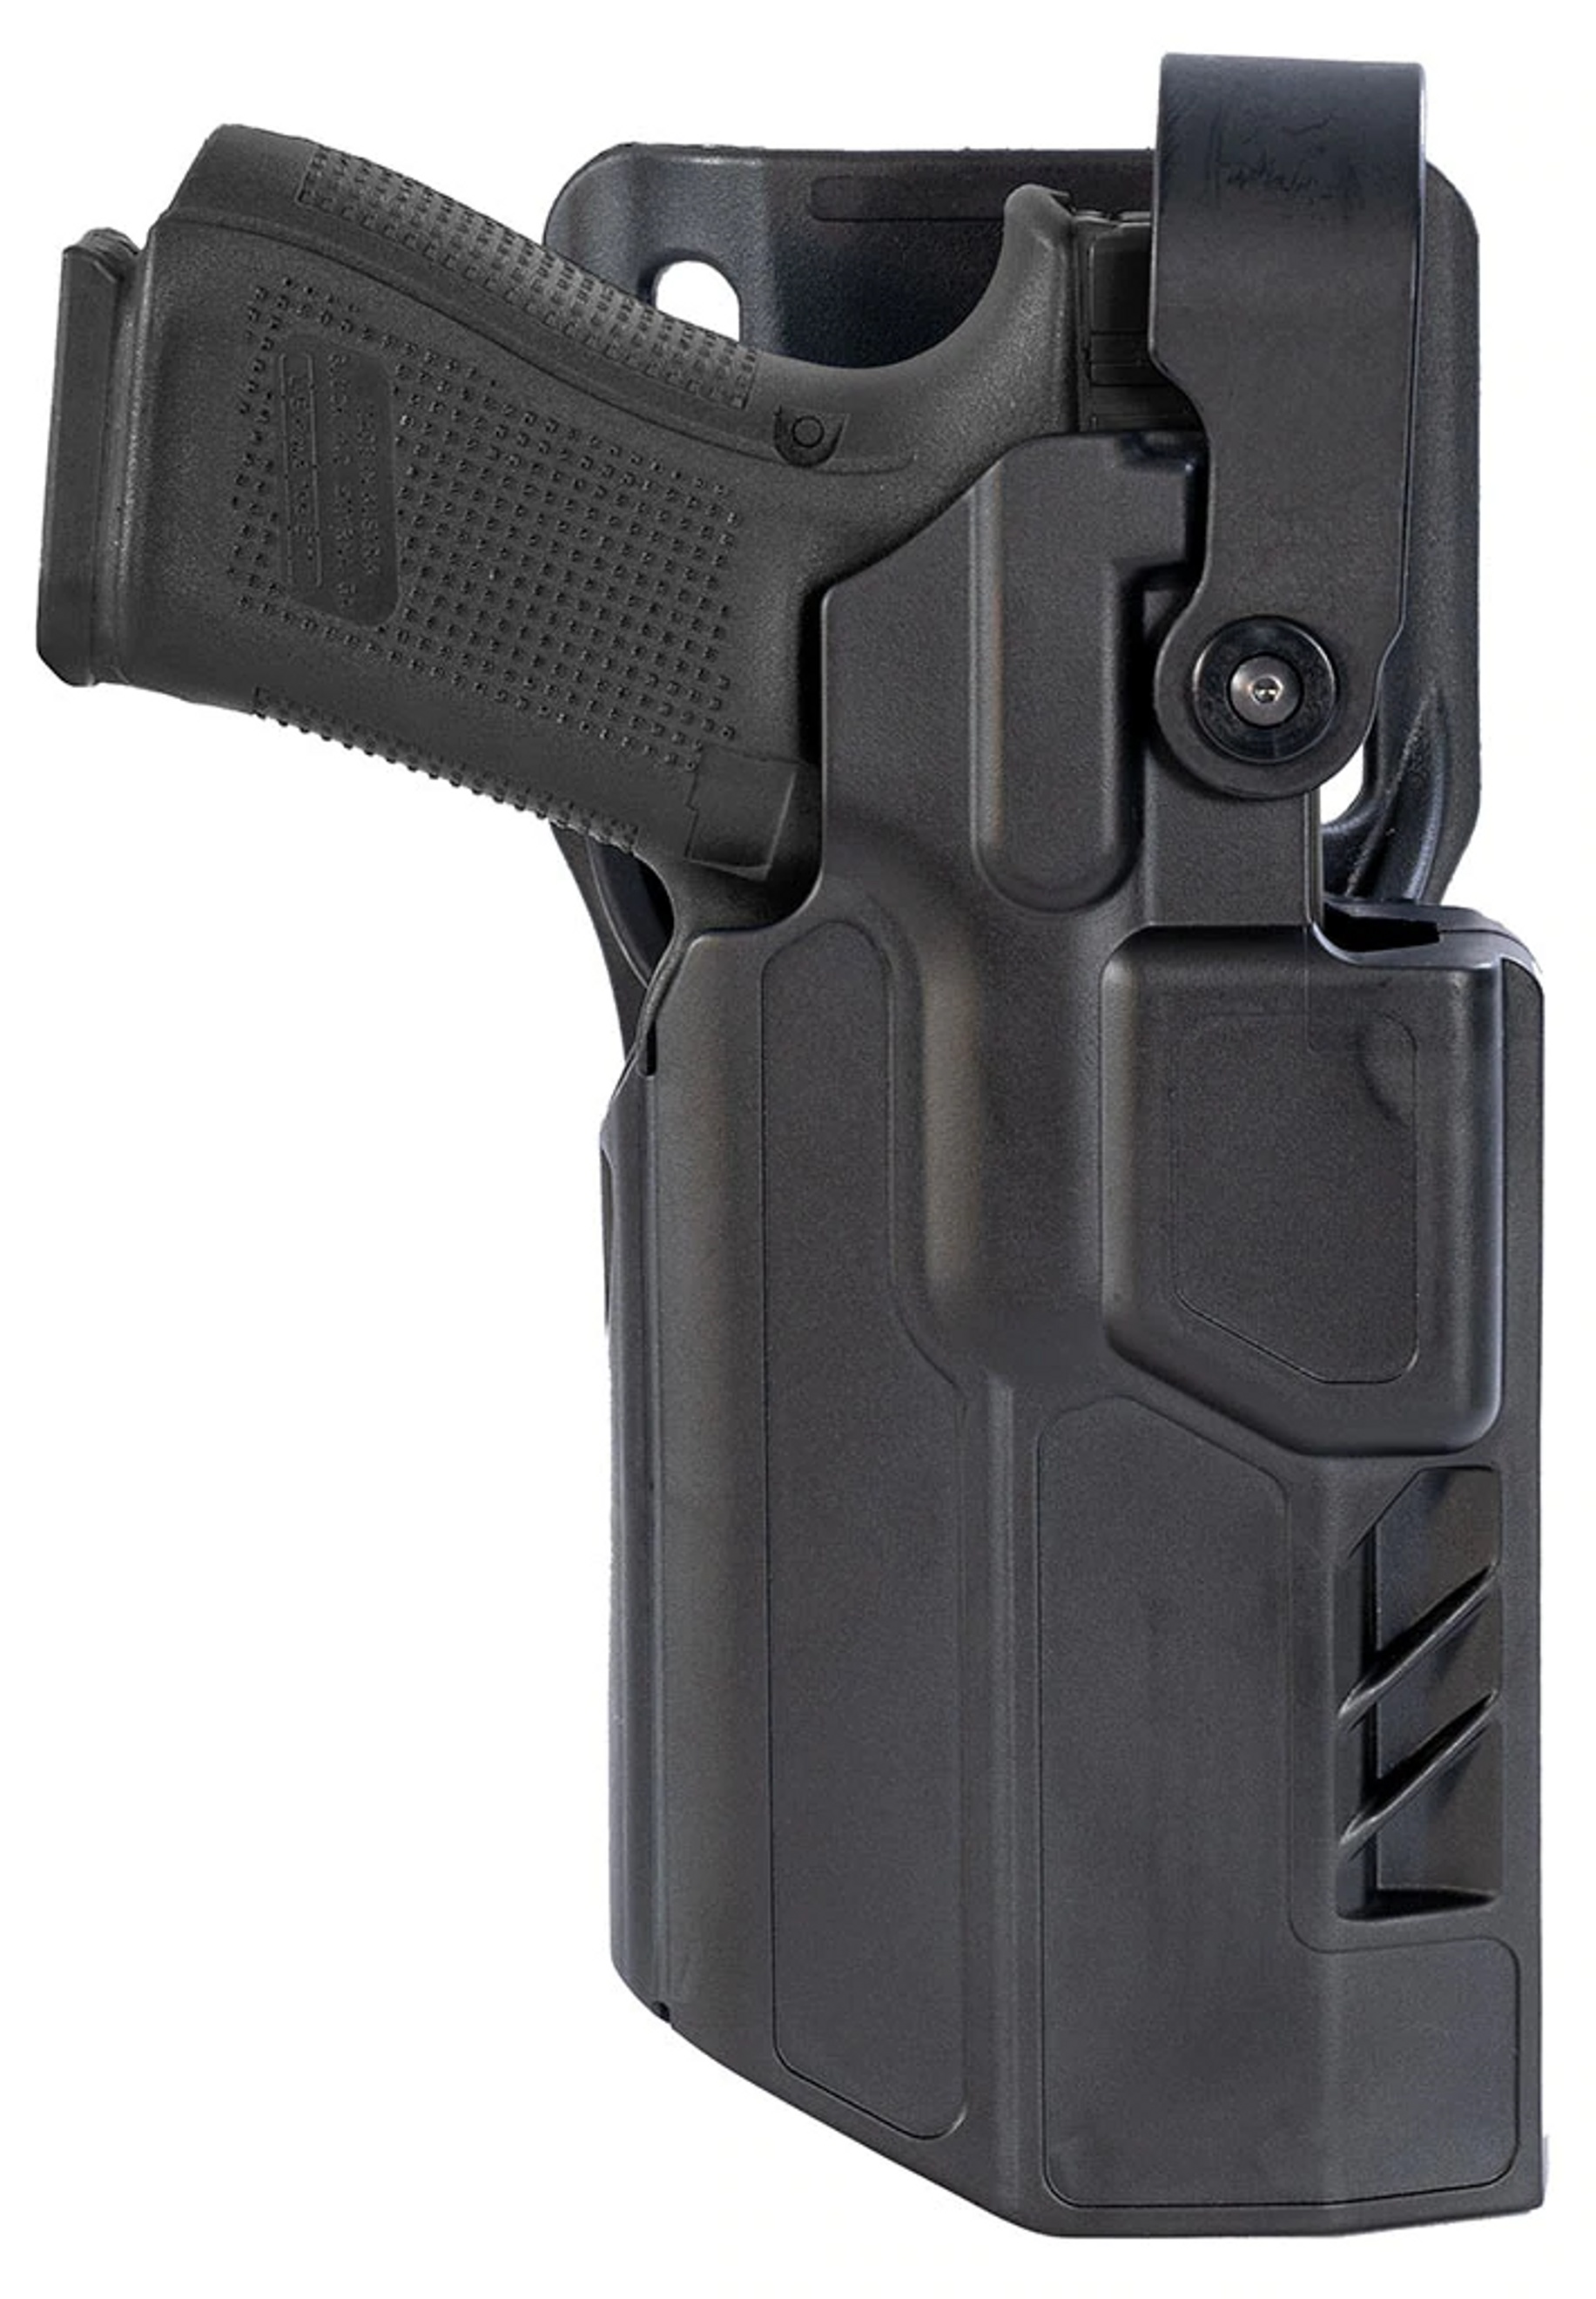 Telr X5000 Light Bearing Holster For Glock 19 W/ Duty Belt - Weave Finish - KRGG-X5000-19HO-1W